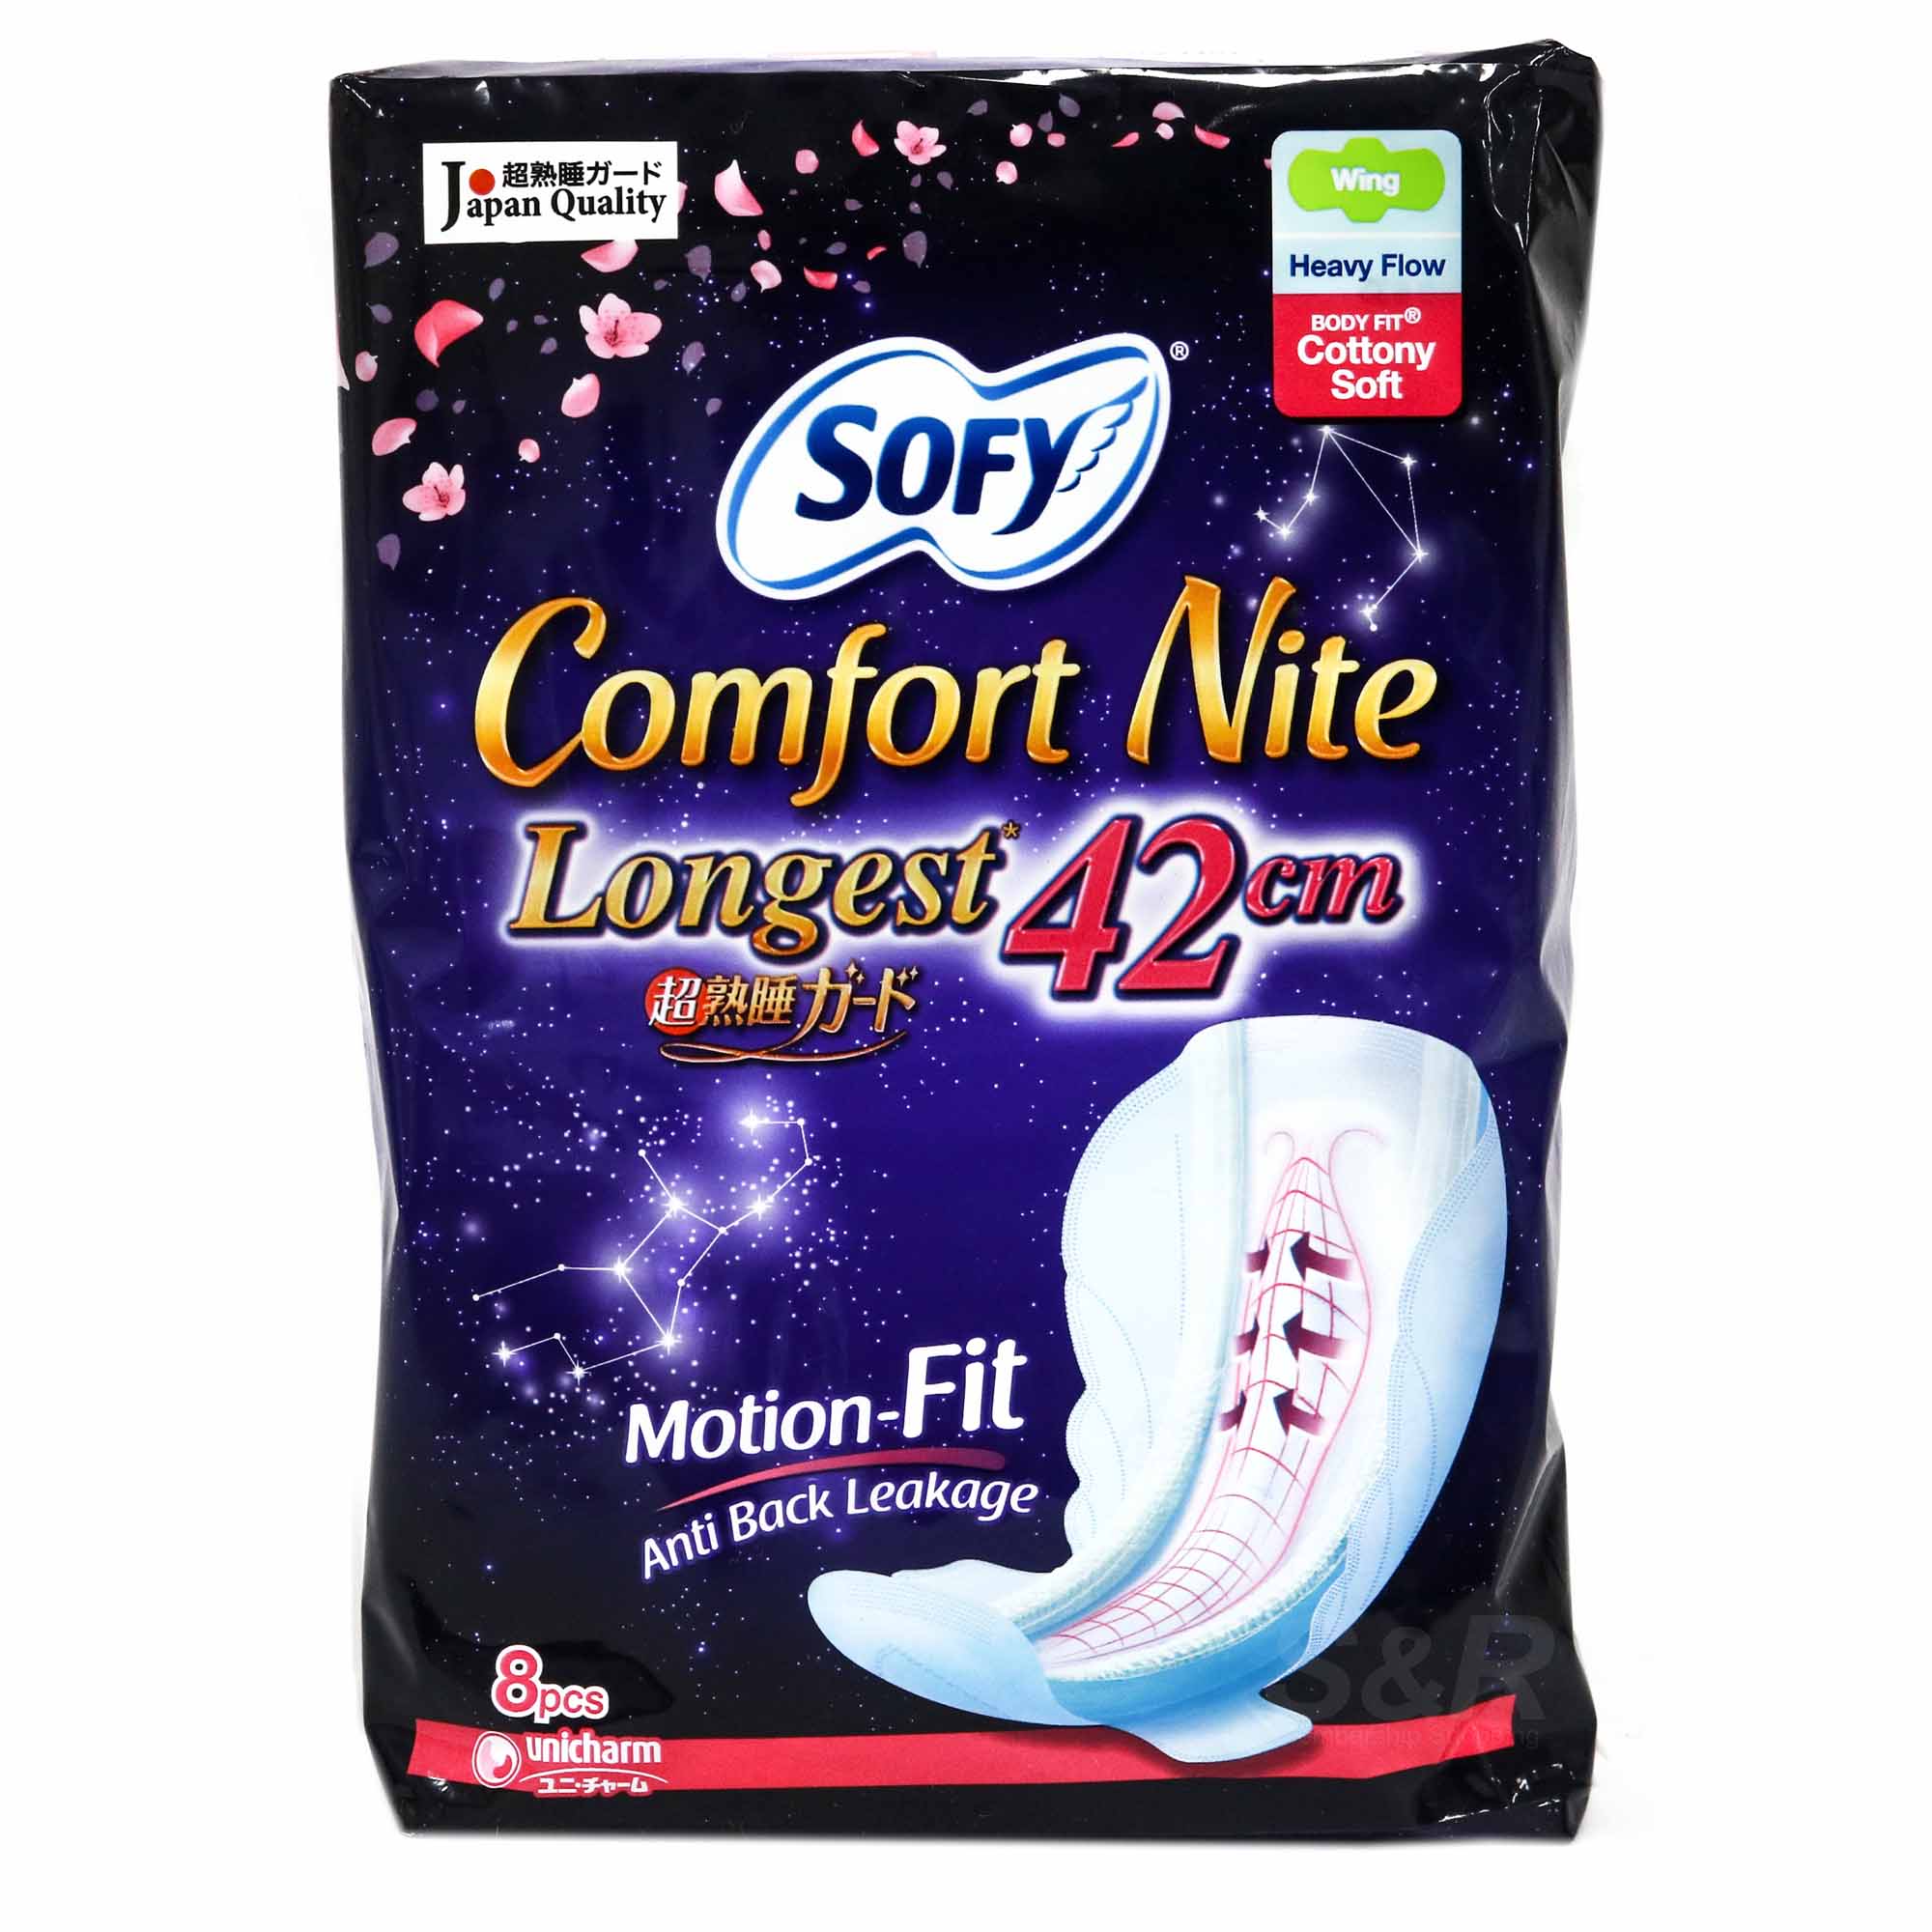 Sofy Comfort Nite Motion Fit Sanitary Napkin 42cm 8pcs